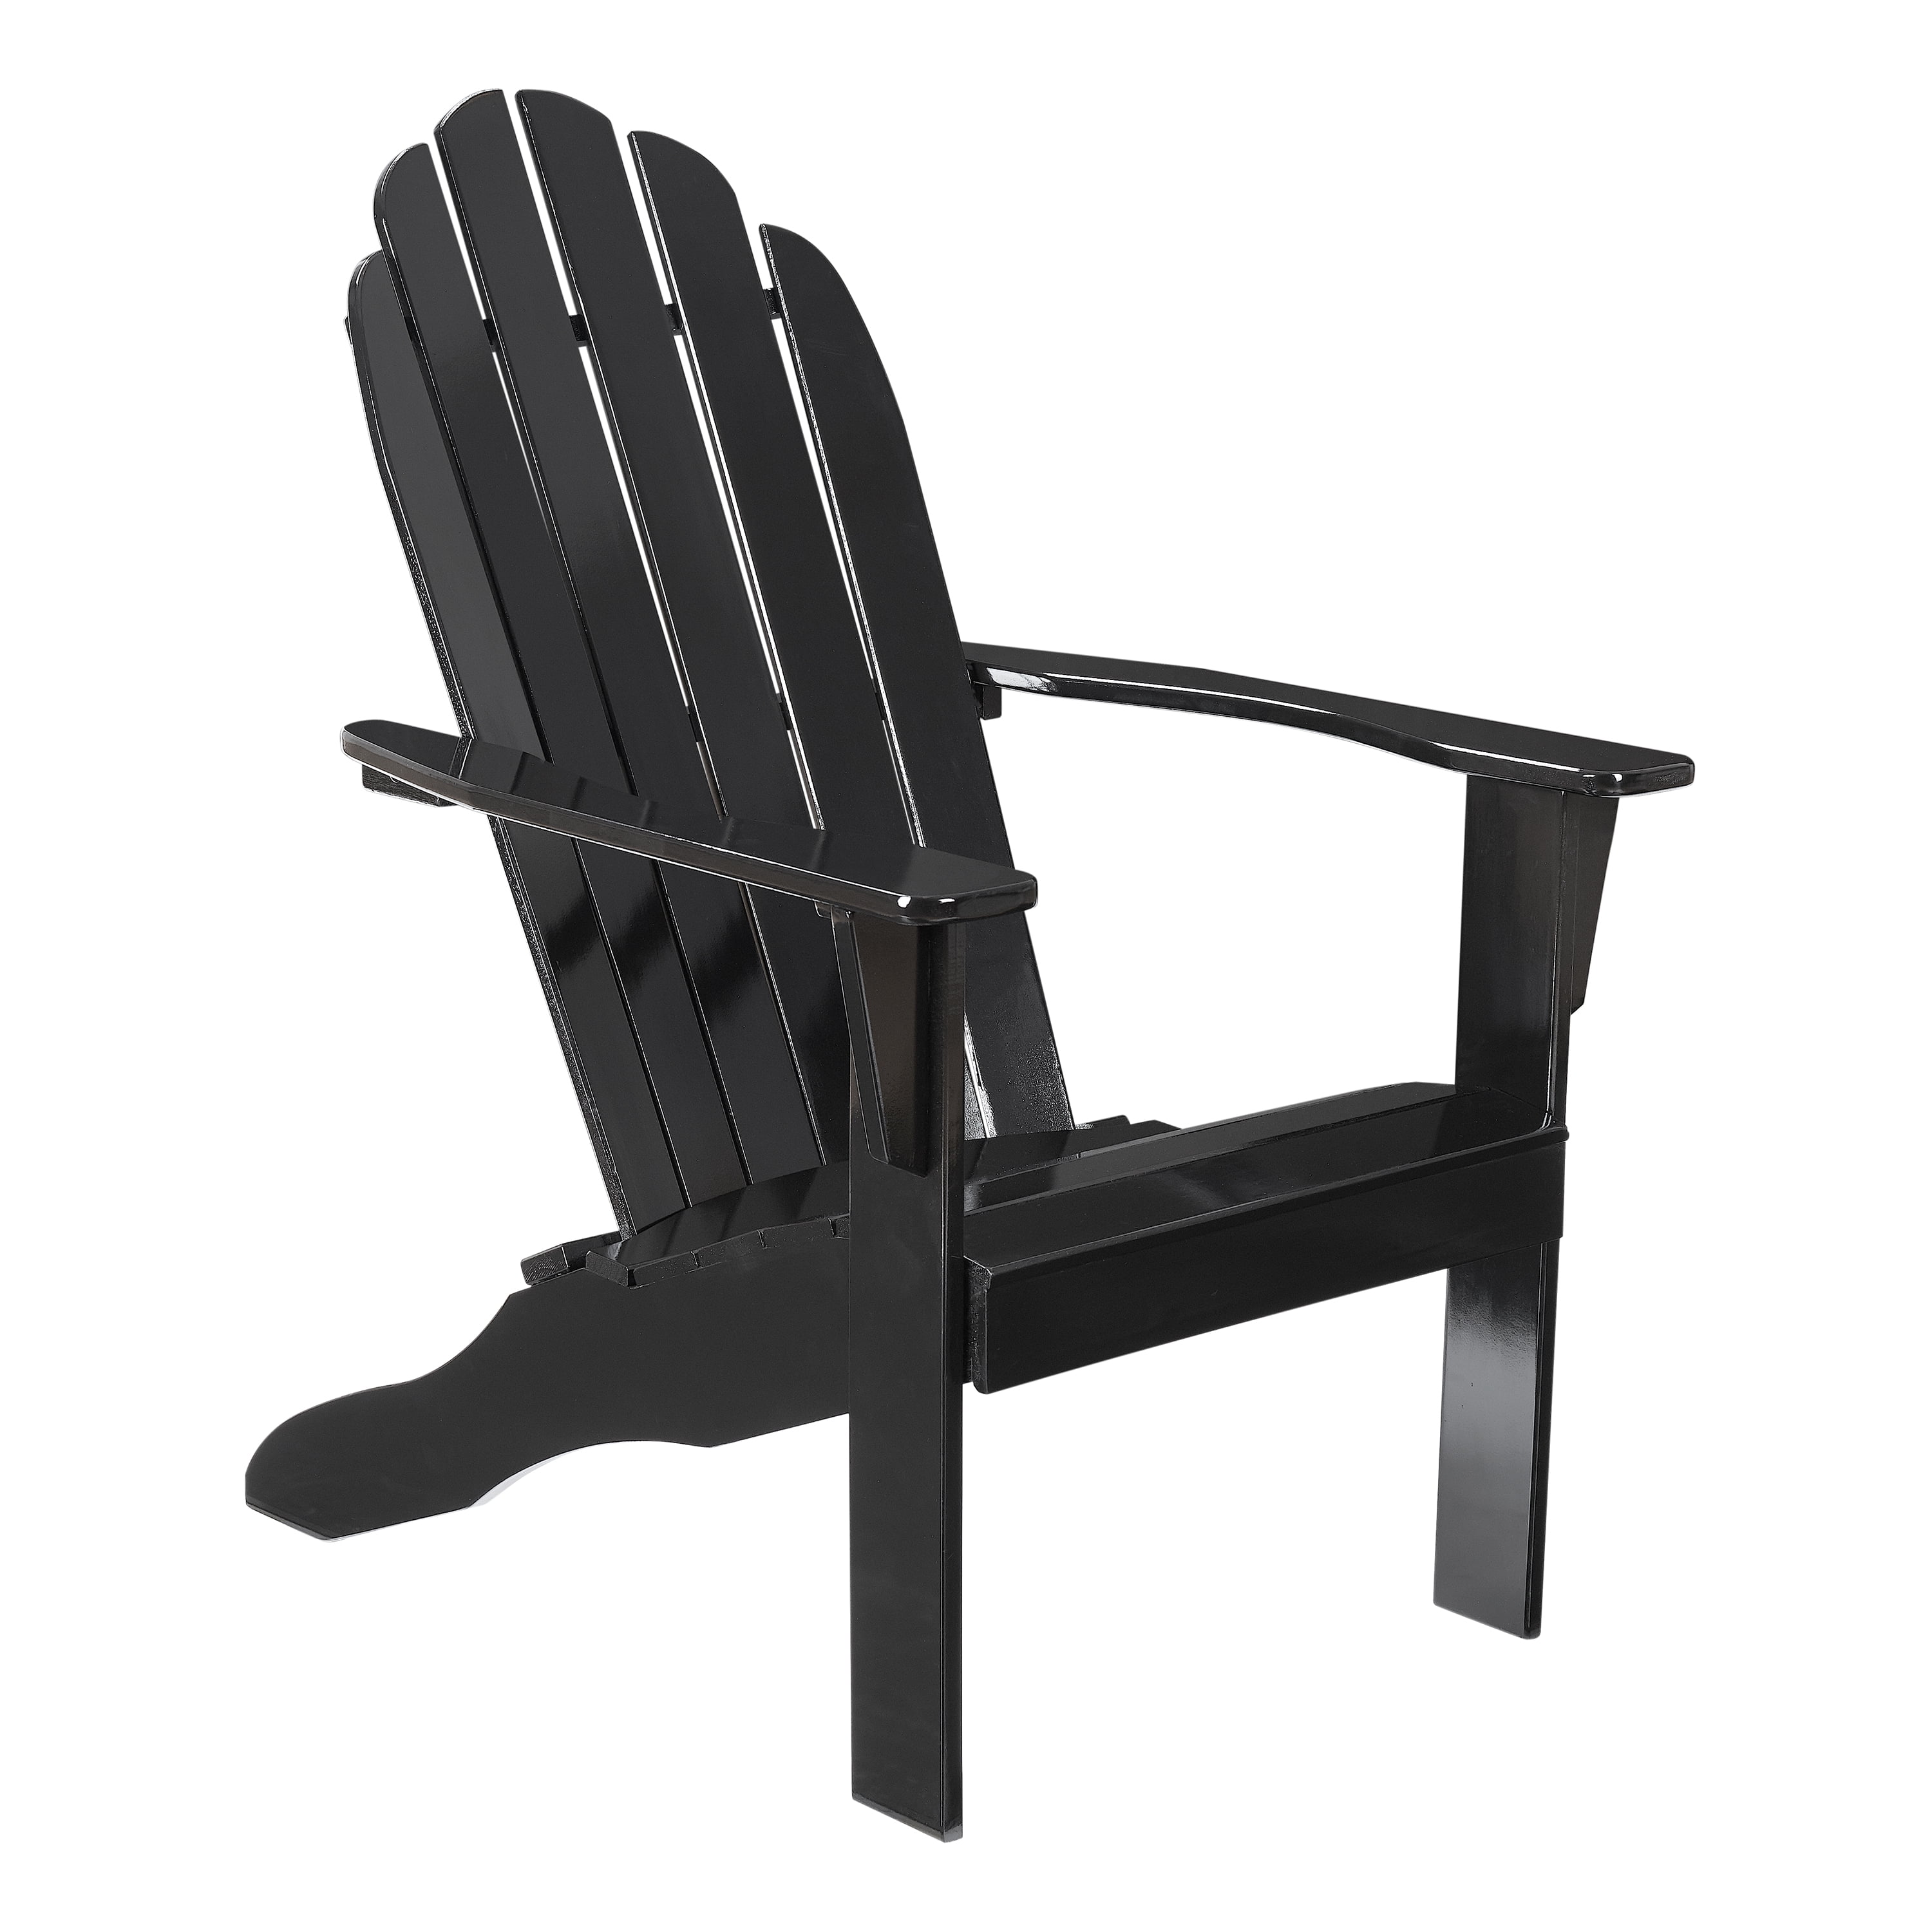 Mainstay Adirondack Chair Black l l 26.50 x 34.00 x 40.25 l Comfortable Wide Backrest Kitchen 